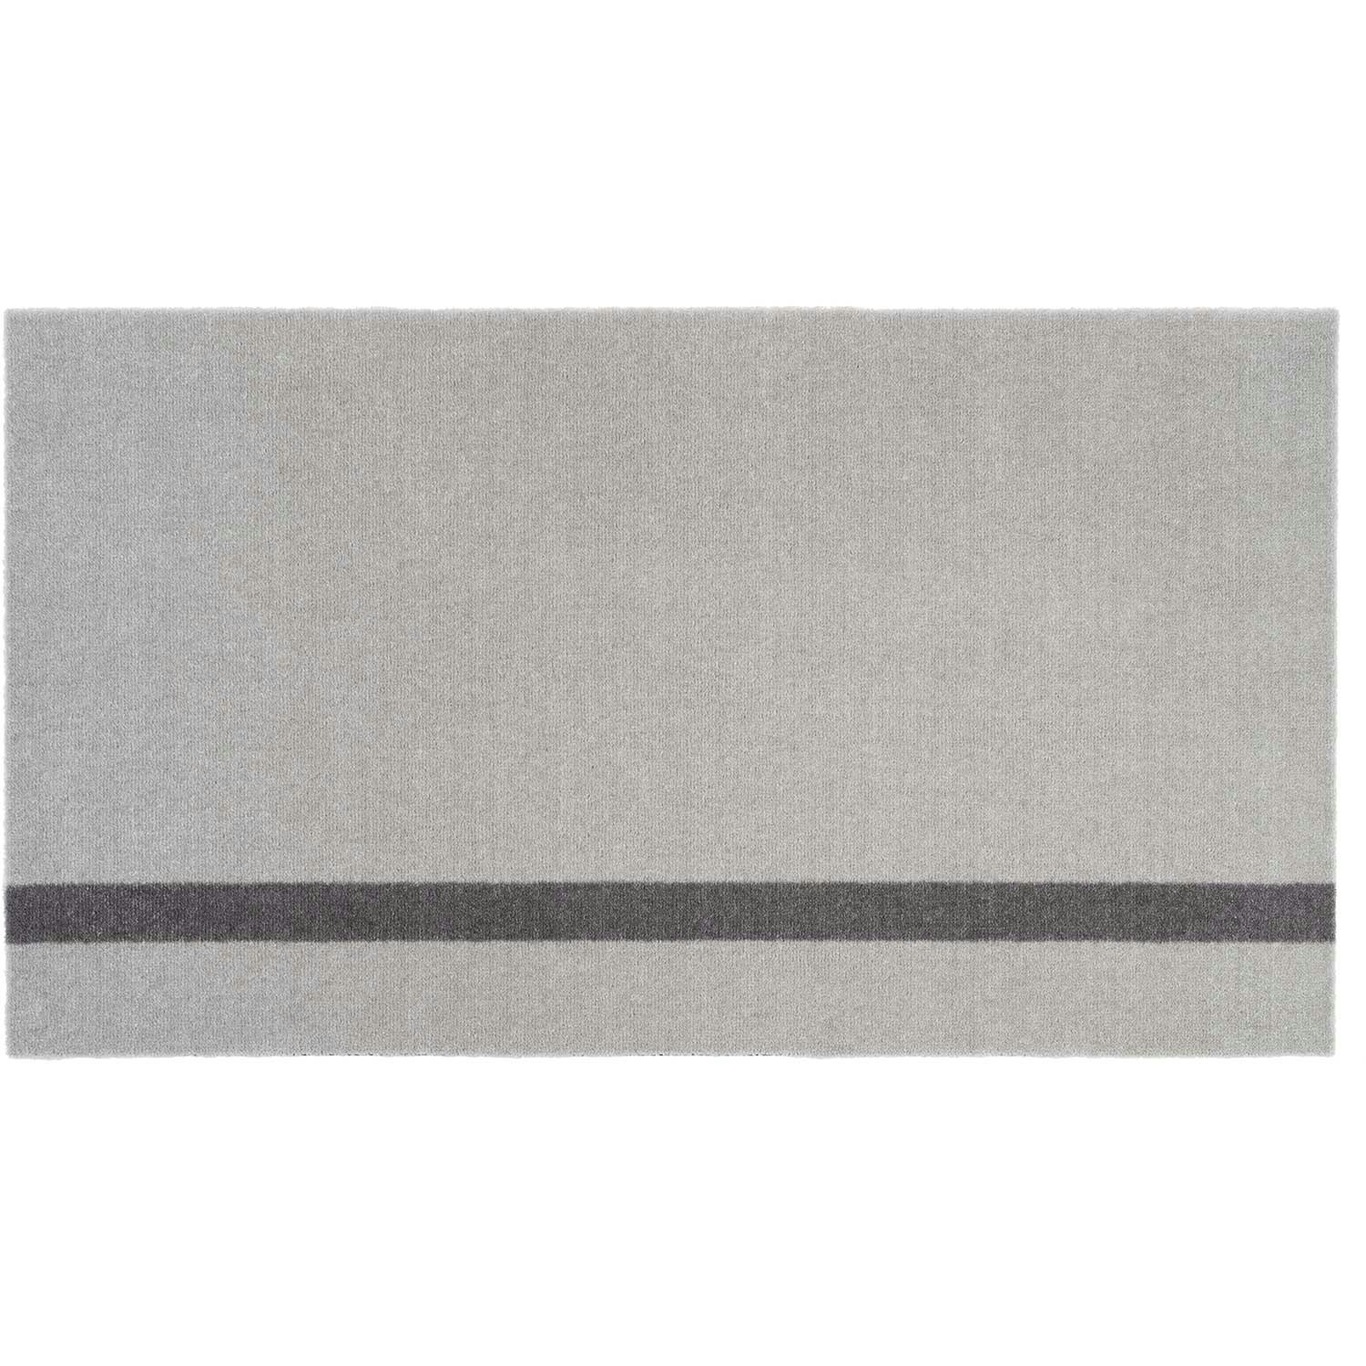 Stripes Vertikal Vloerkleed Lichtgrijs / Steel Grey, 67x120 cm